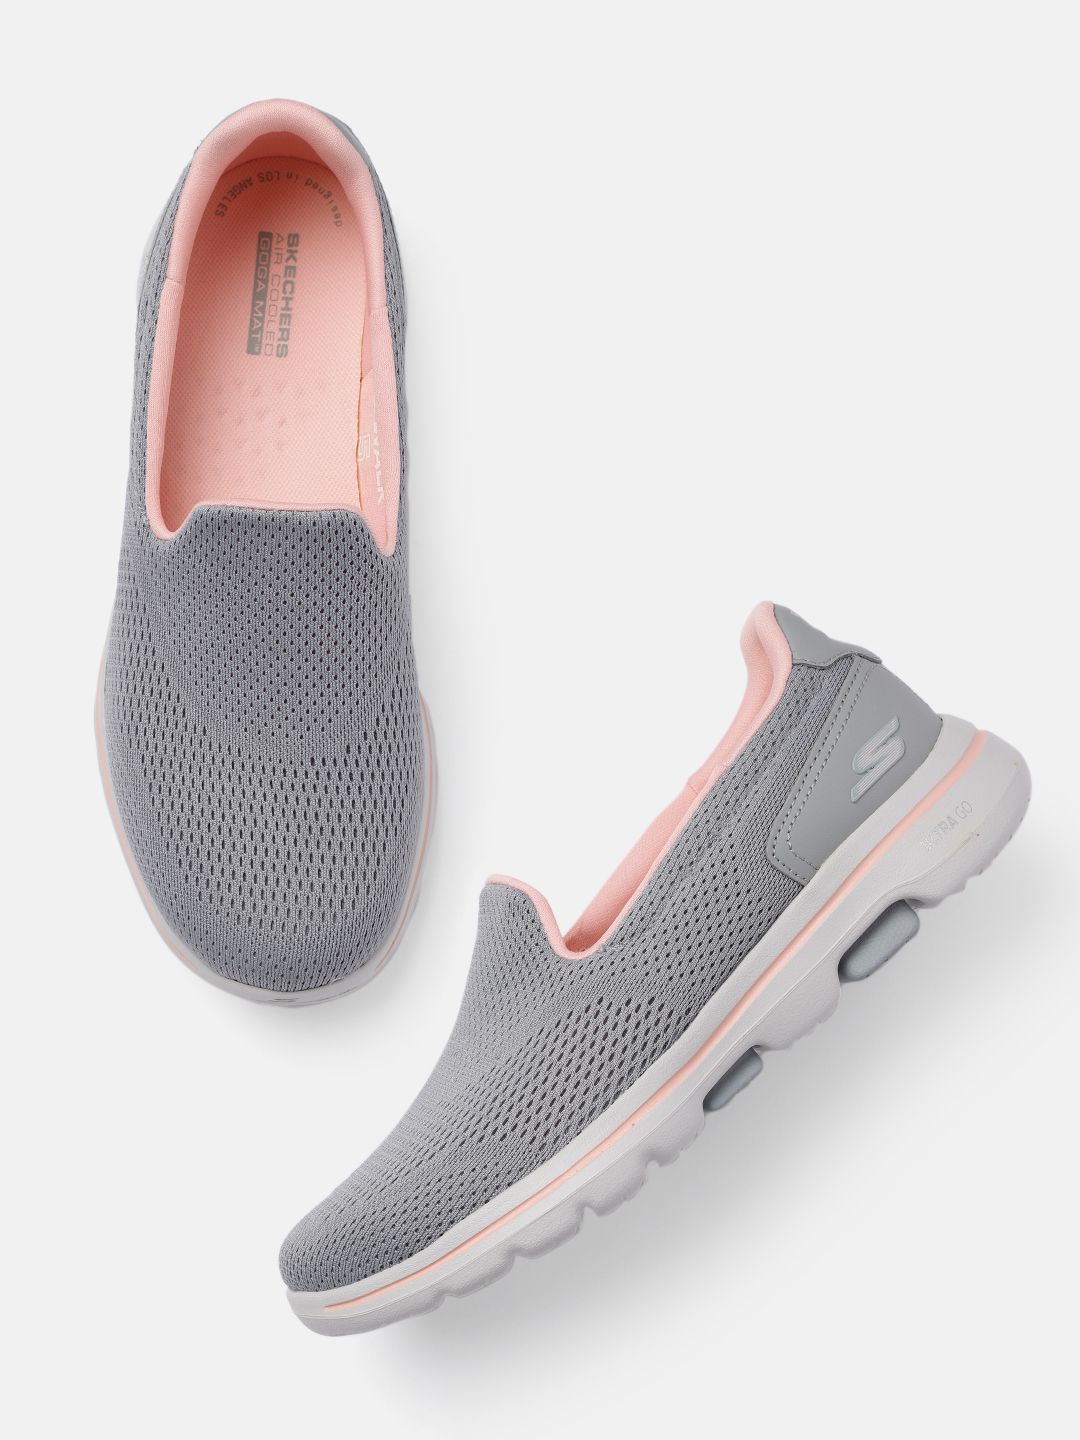 Skechers Women Grey GO WALK 5 - OCEAN SPARKLE Shoes Price in India